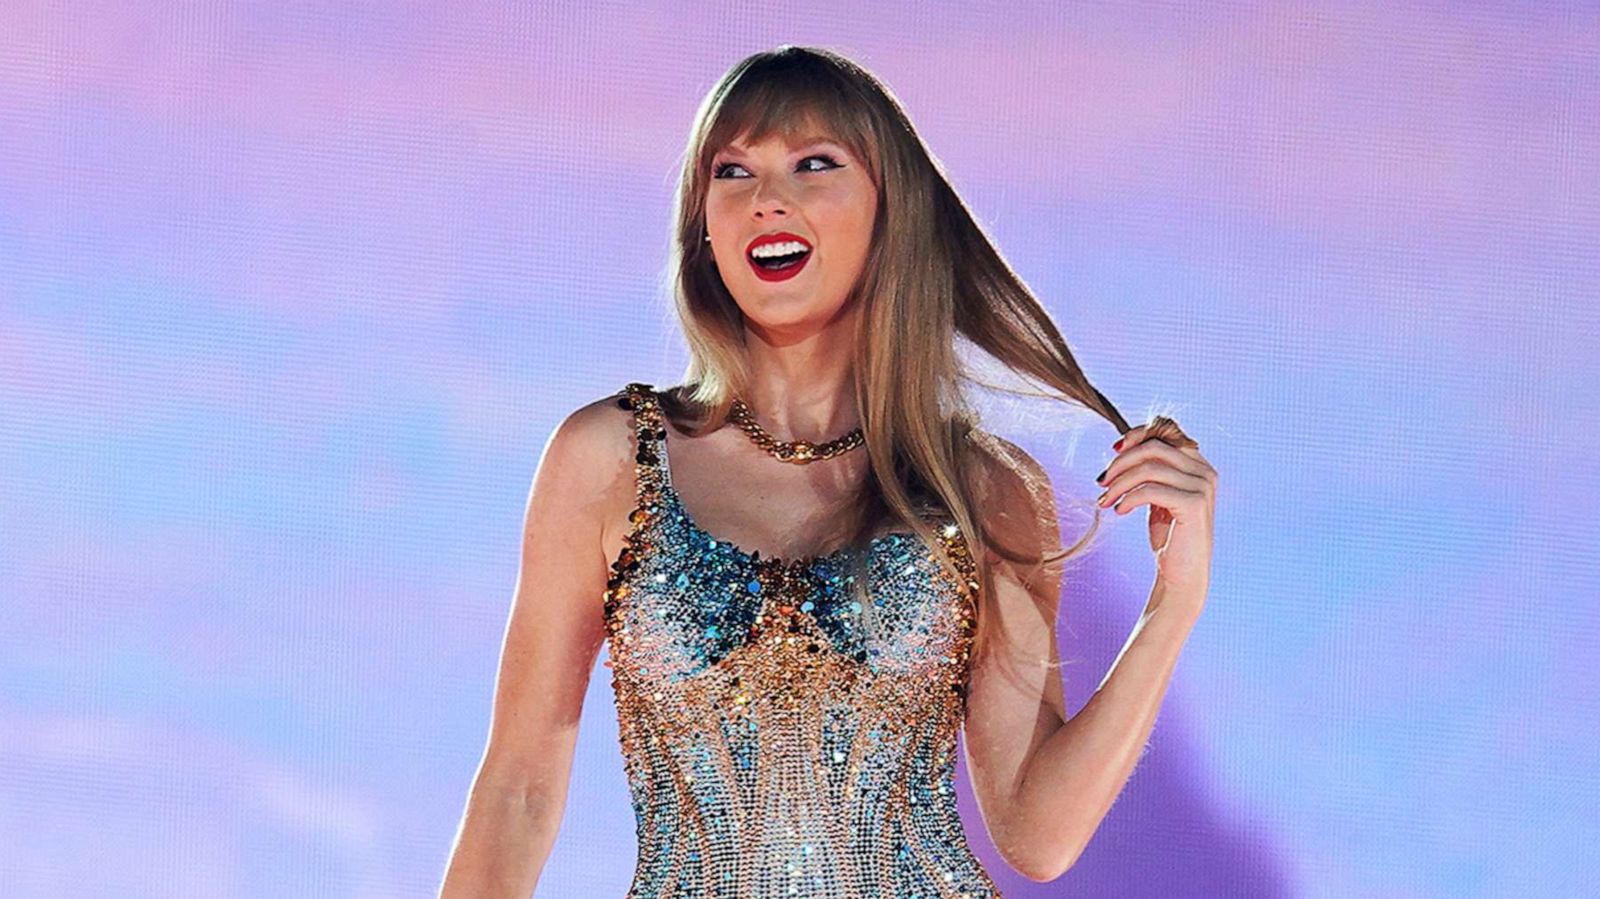 Taylor Swift 'Speak Now' Rerecording: Release Date, Details